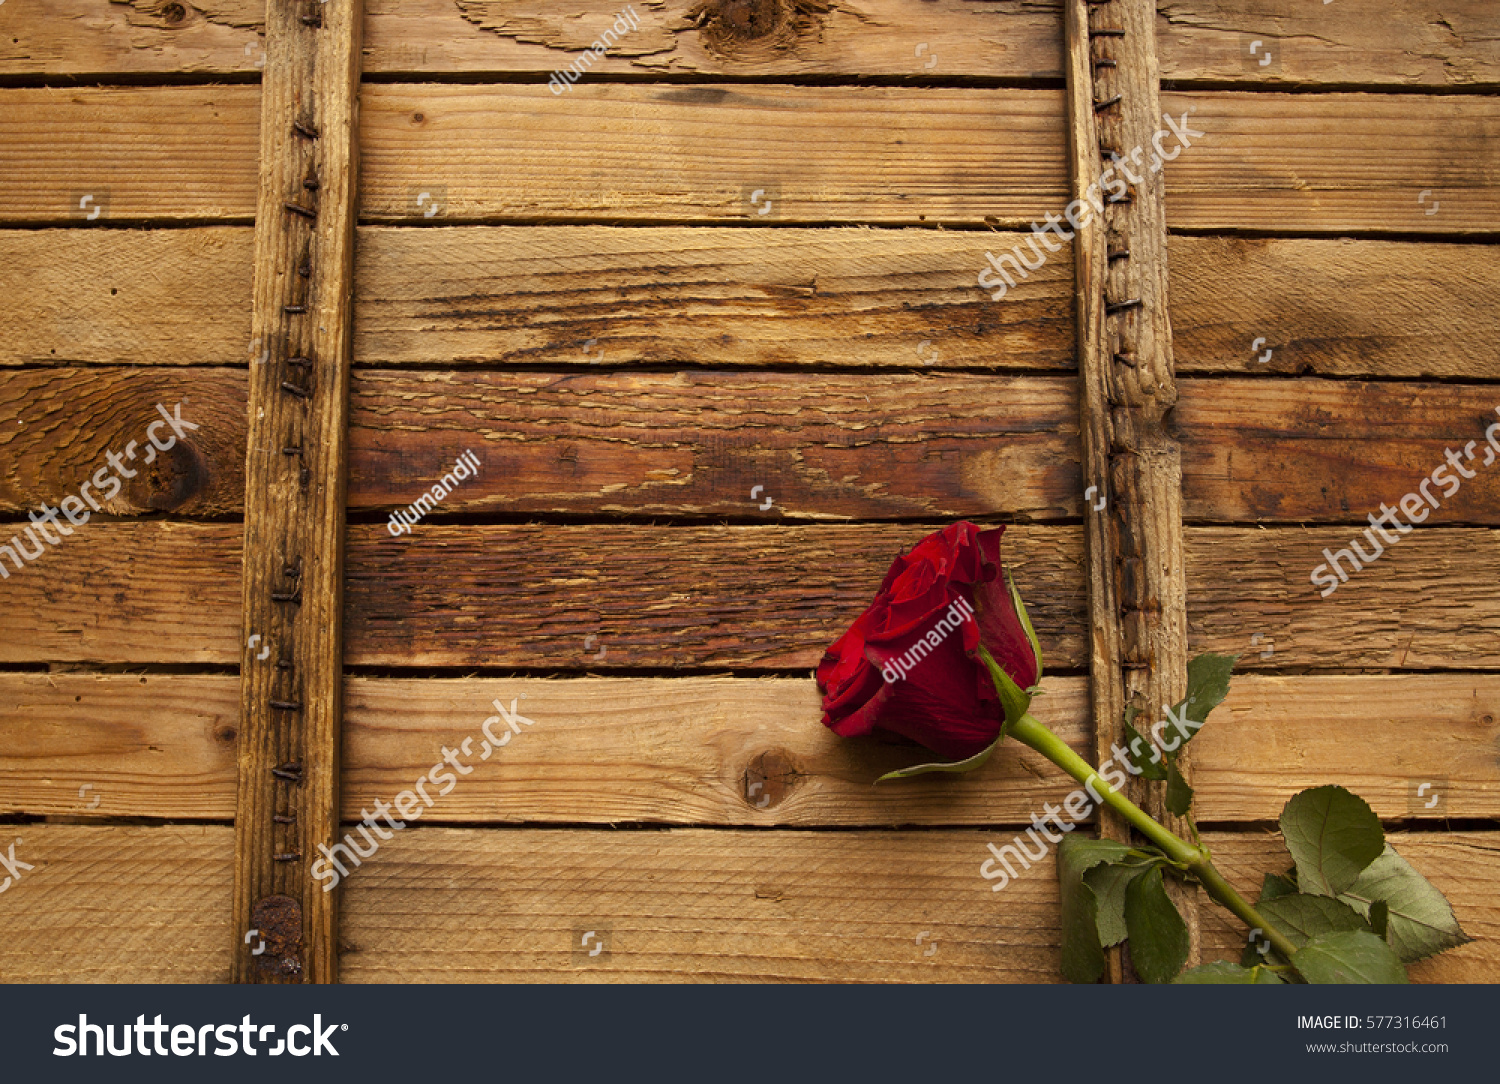 Rose on vintage wooden background, old style #577316461